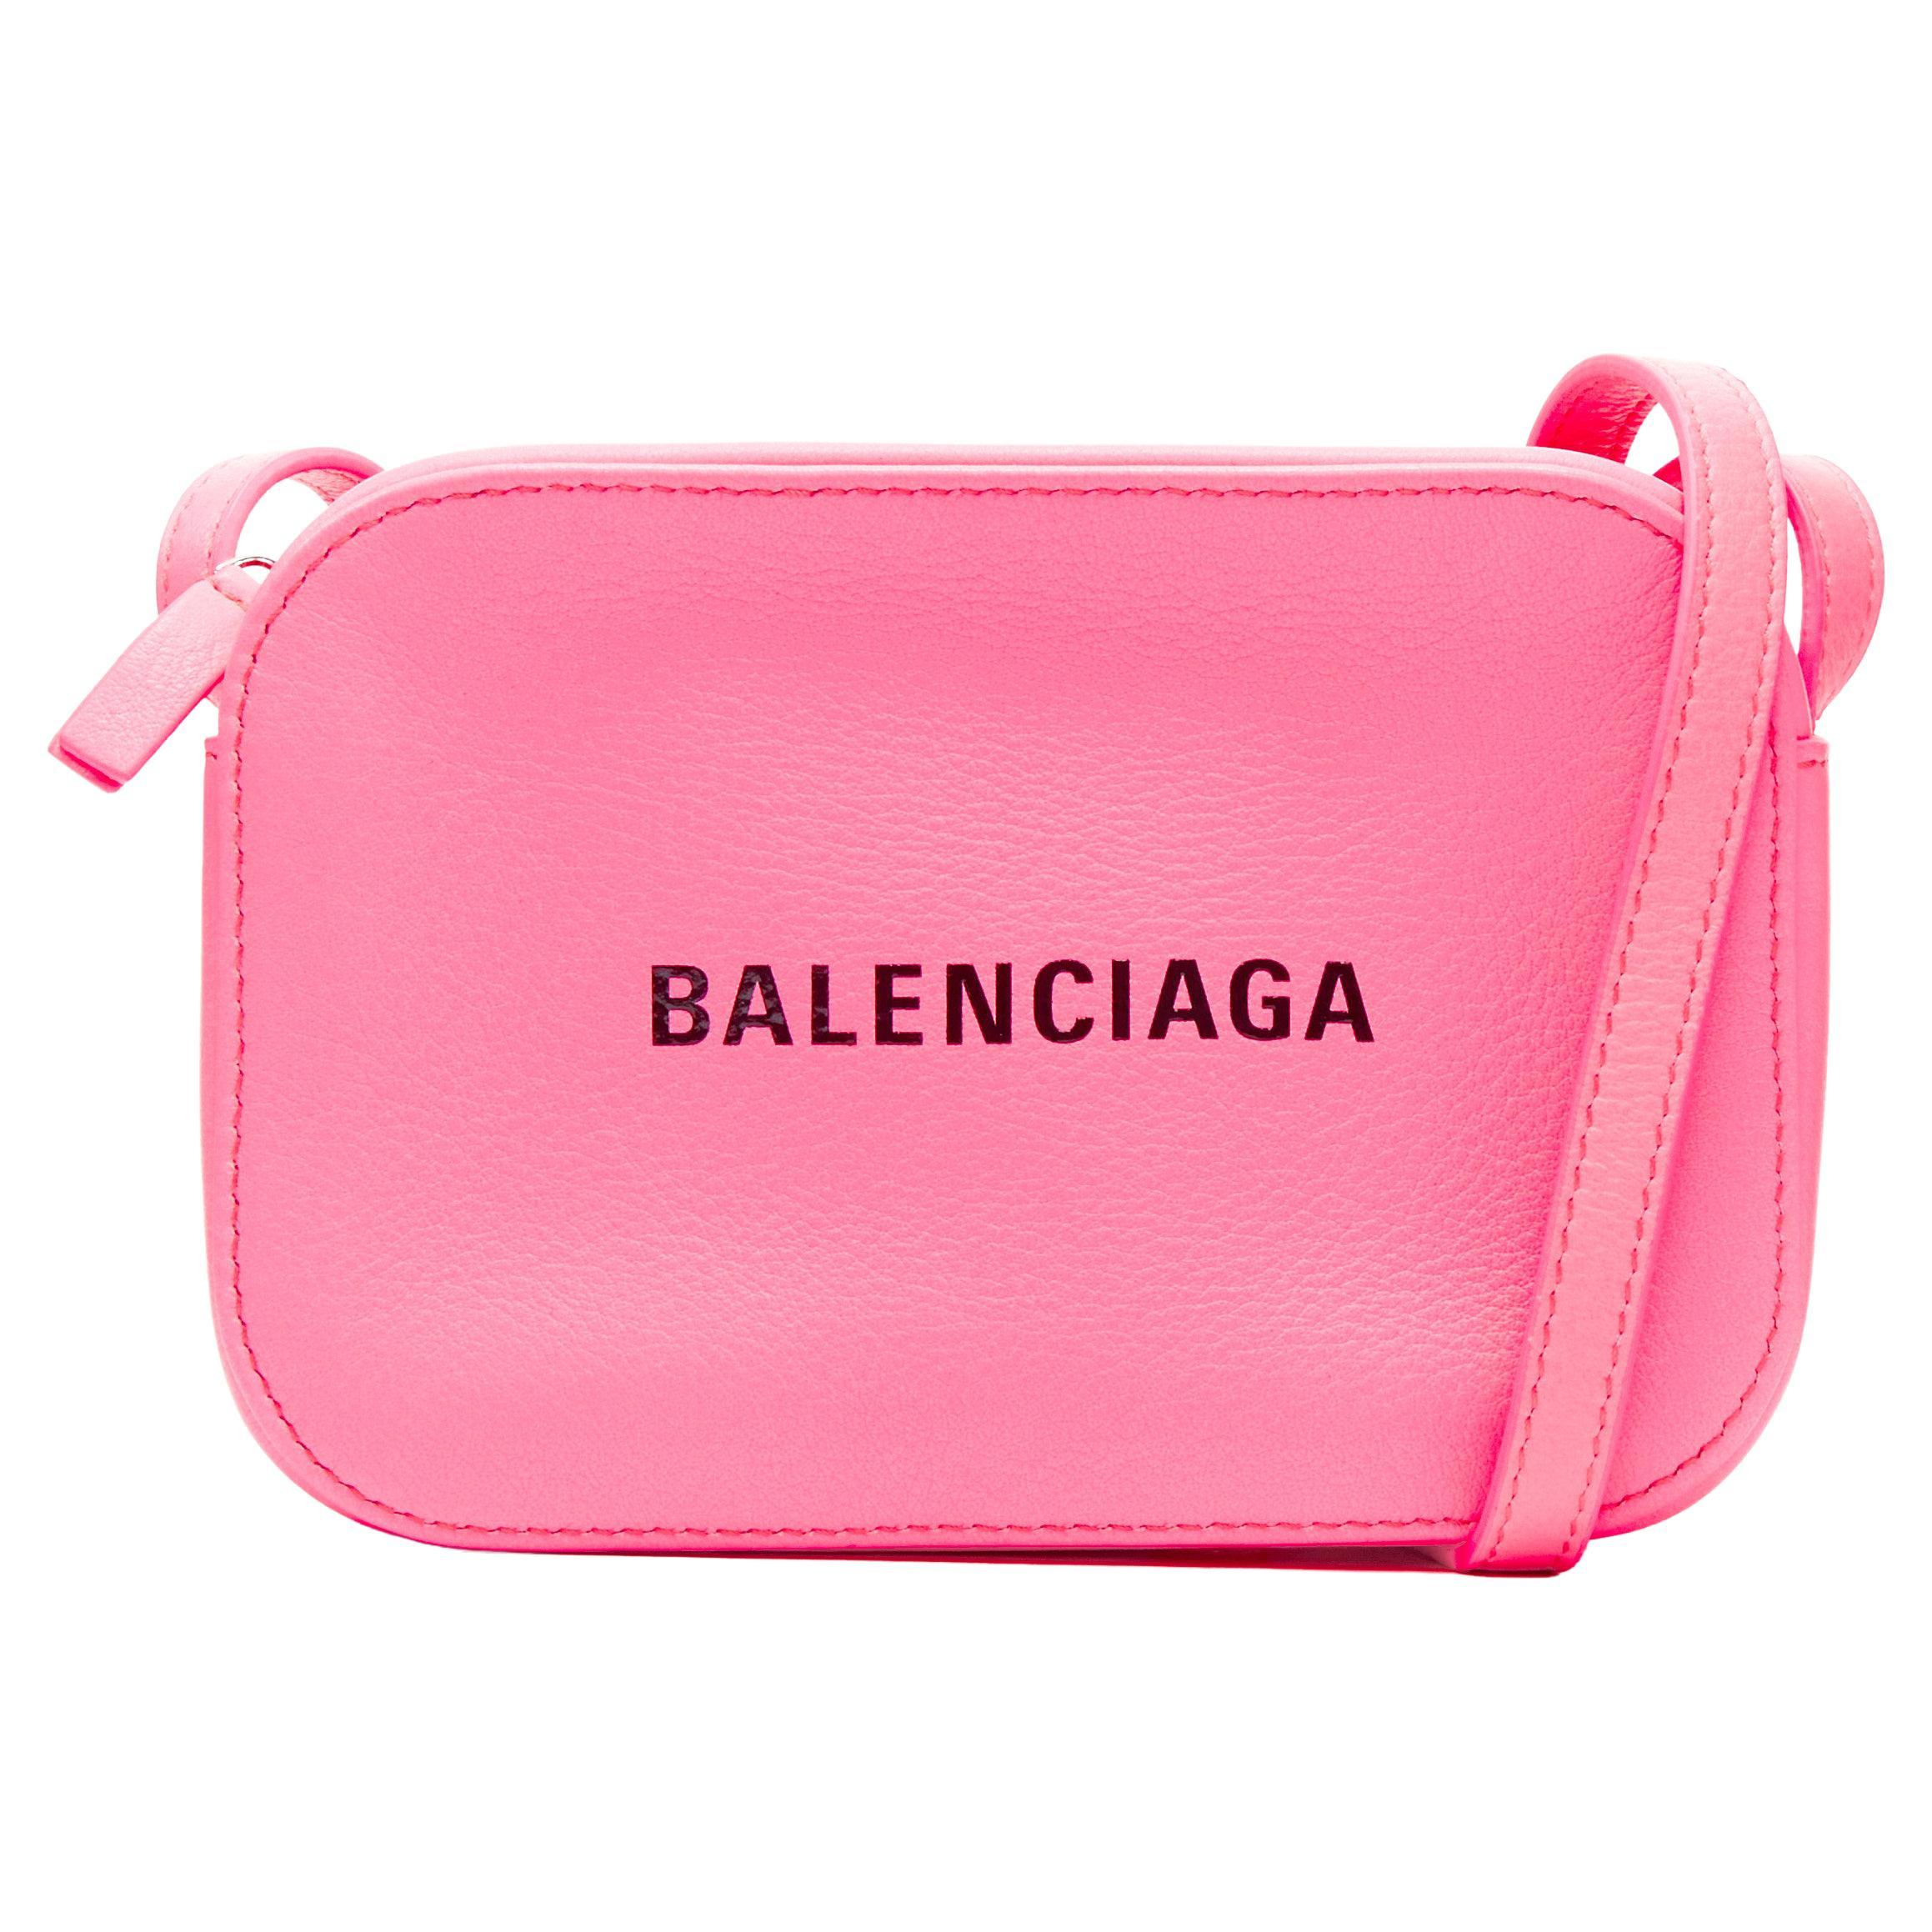 LA COOL & CHIC: Photo  Pink bags outfit, Pink balenciaga